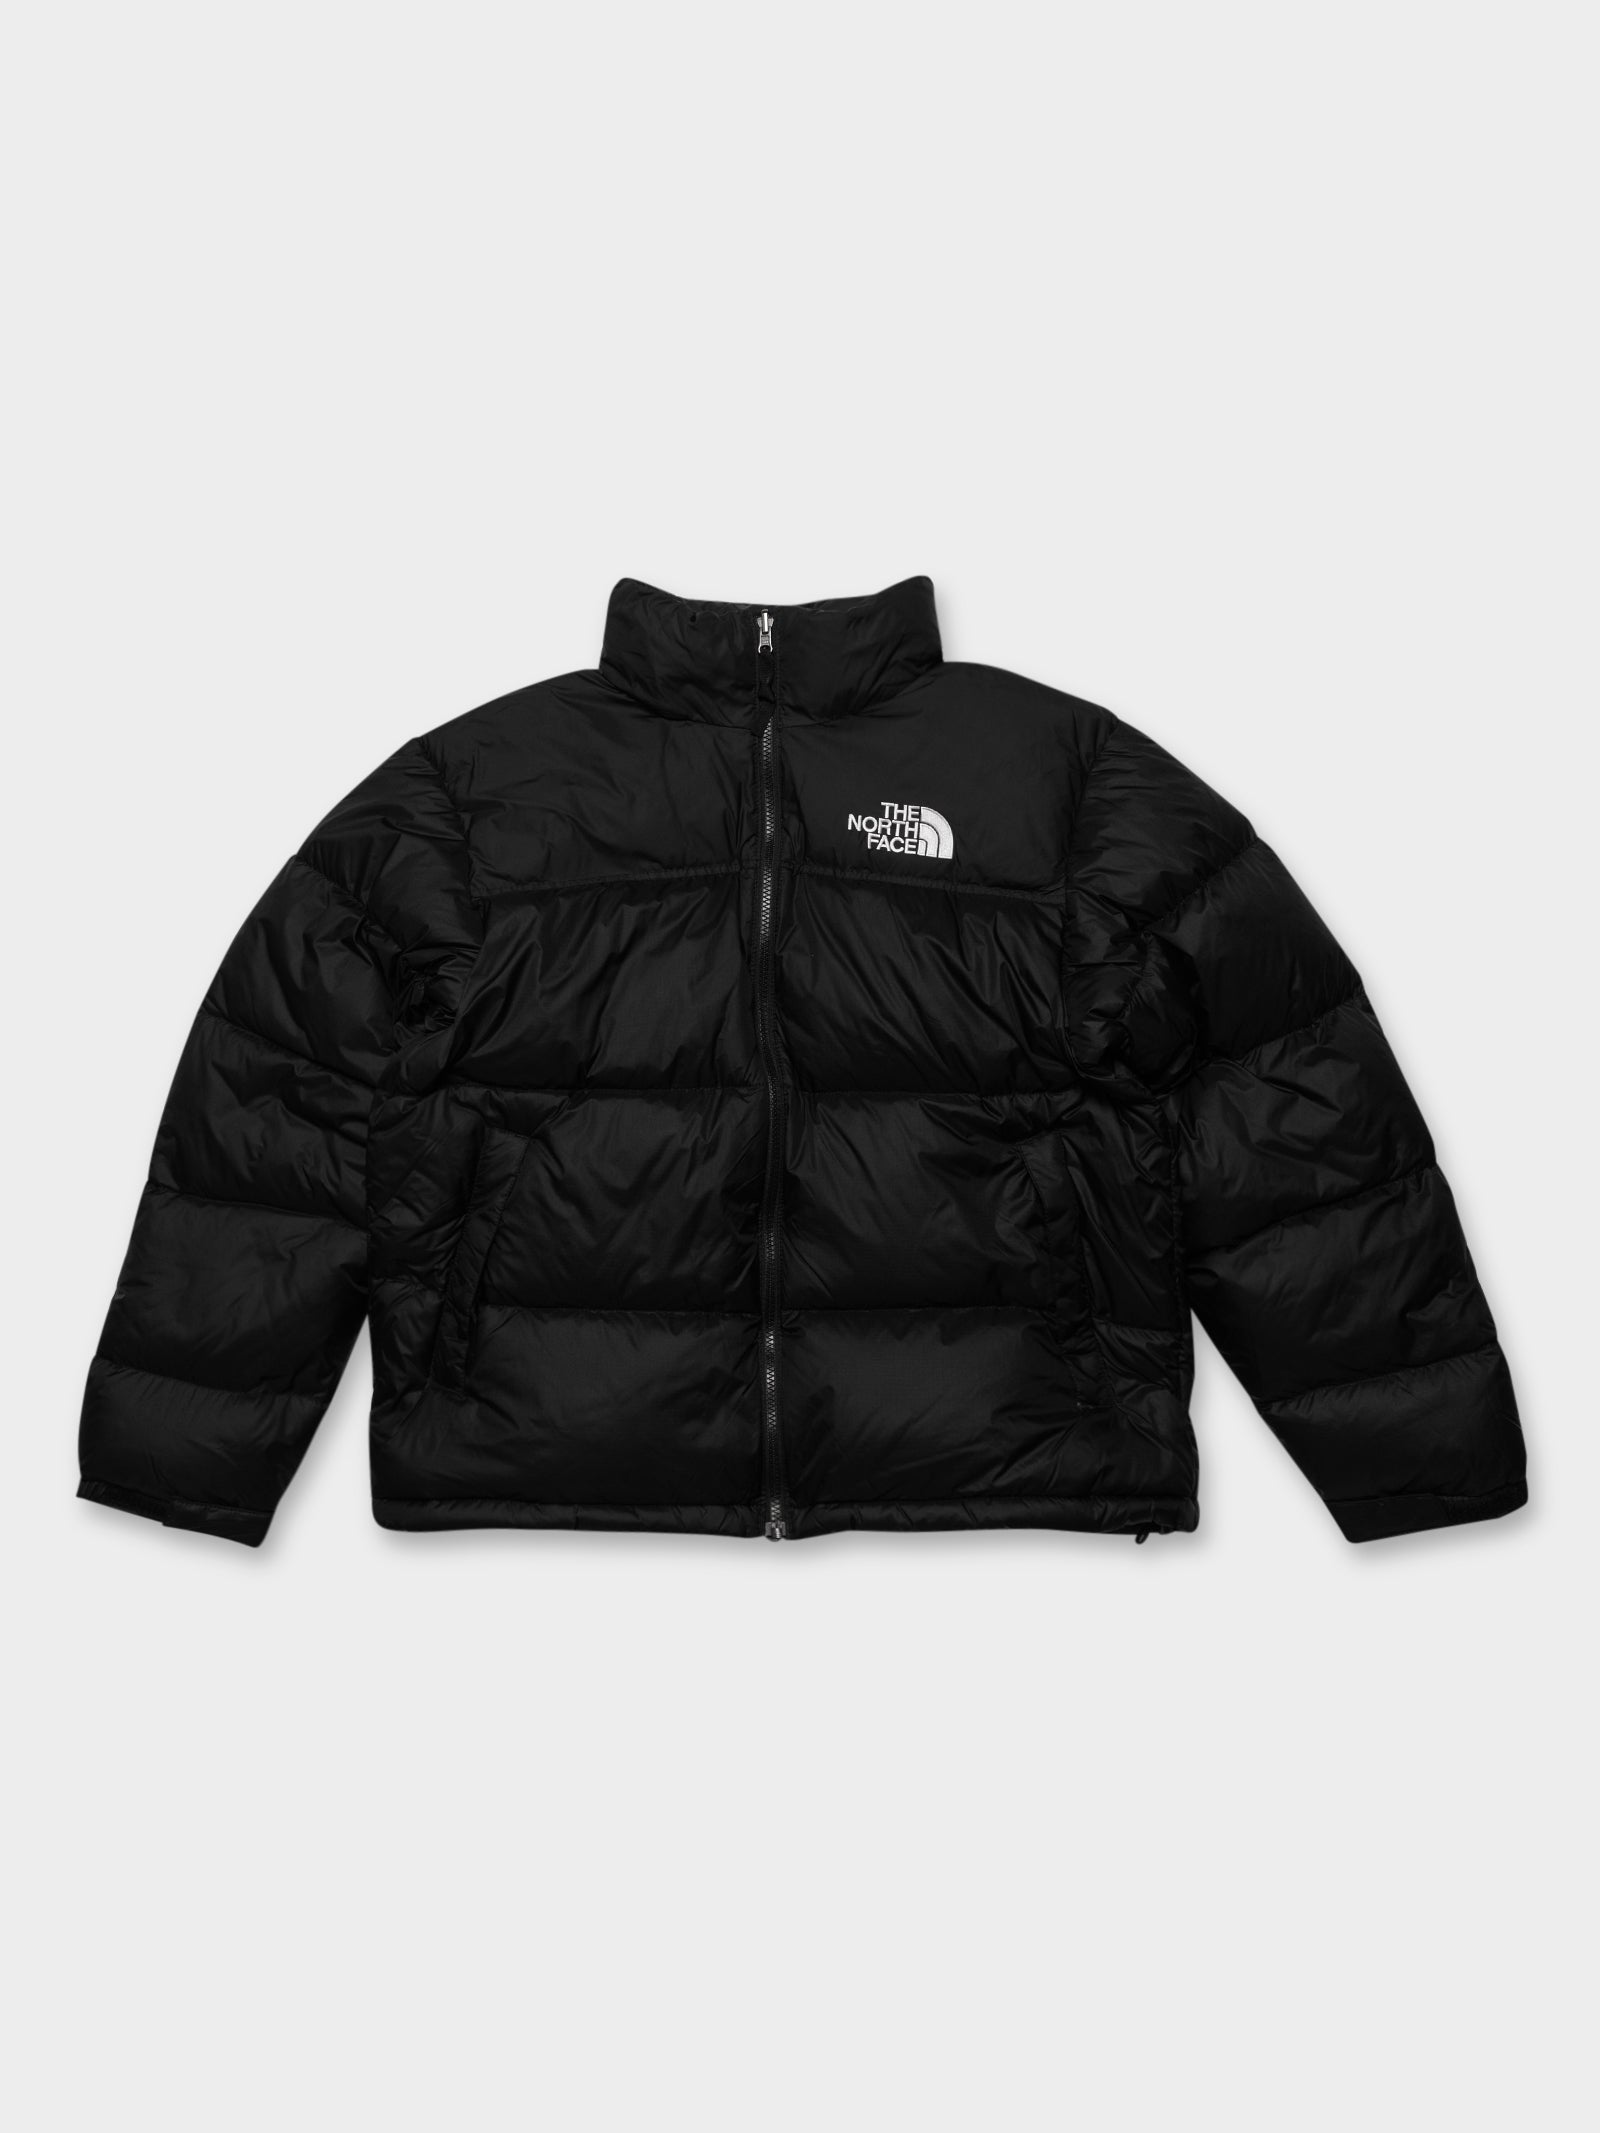 1996 Retro Nuptse Jacket in Black - Glue Store